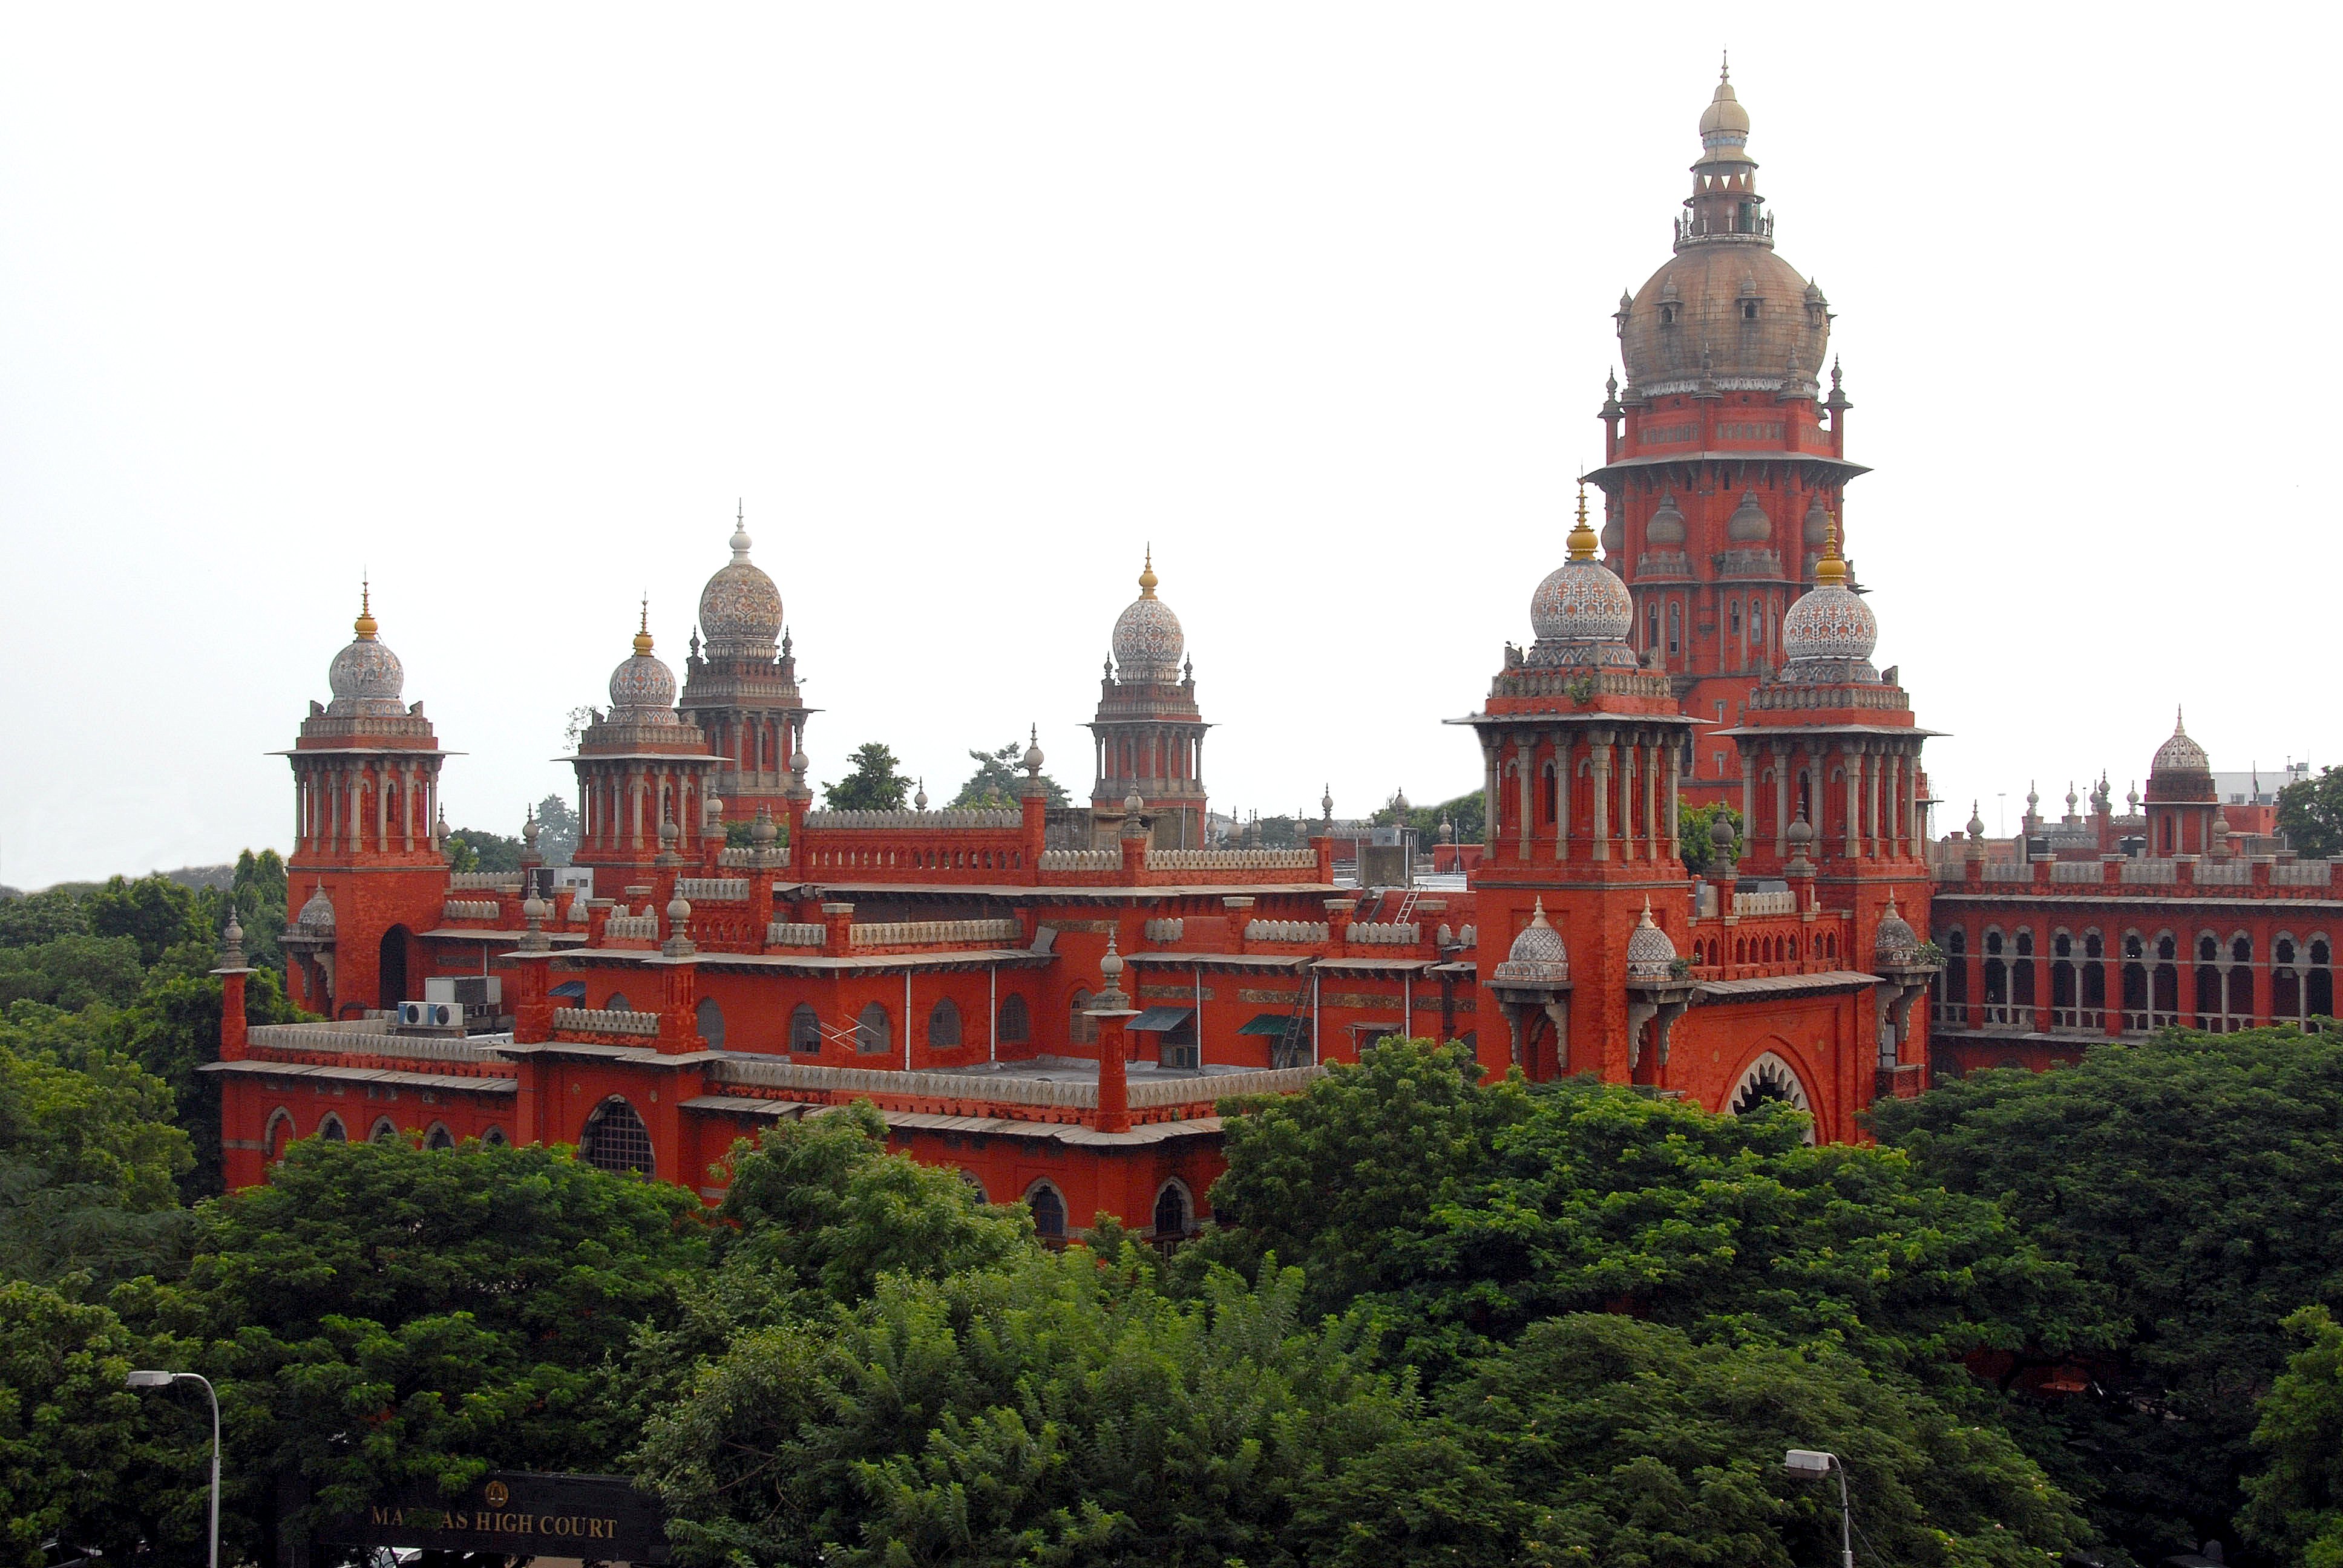 Madras High Court Wikipedia